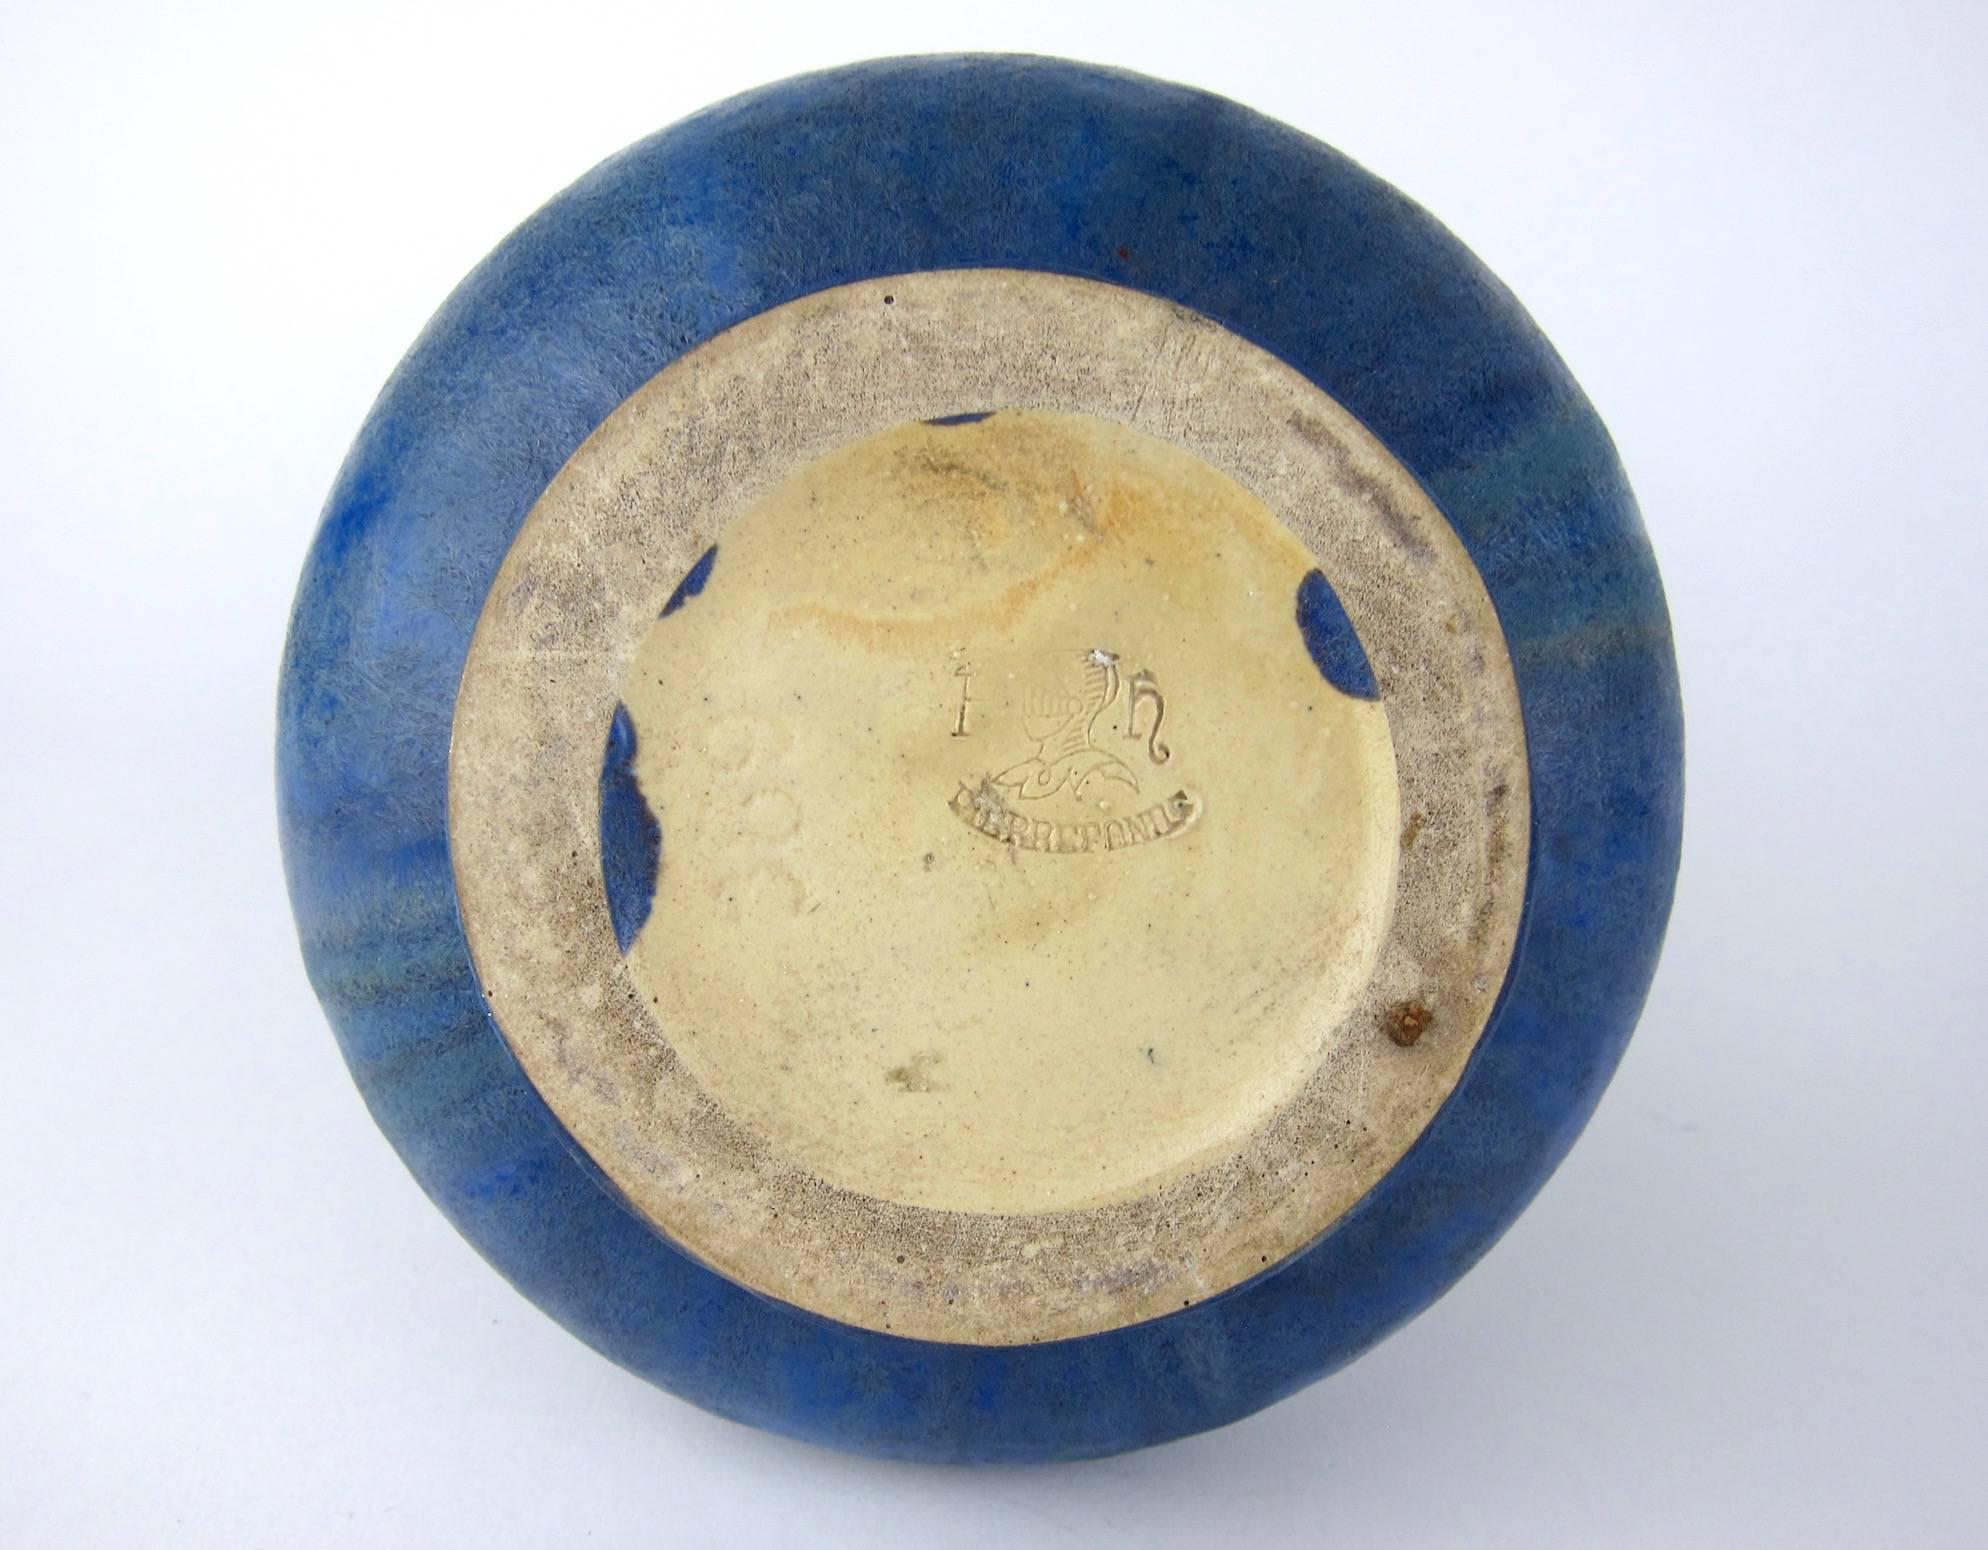 Glazed Early 20th Century French Pierrefonds Stoneware Vase with Blue Crystalline Glaze